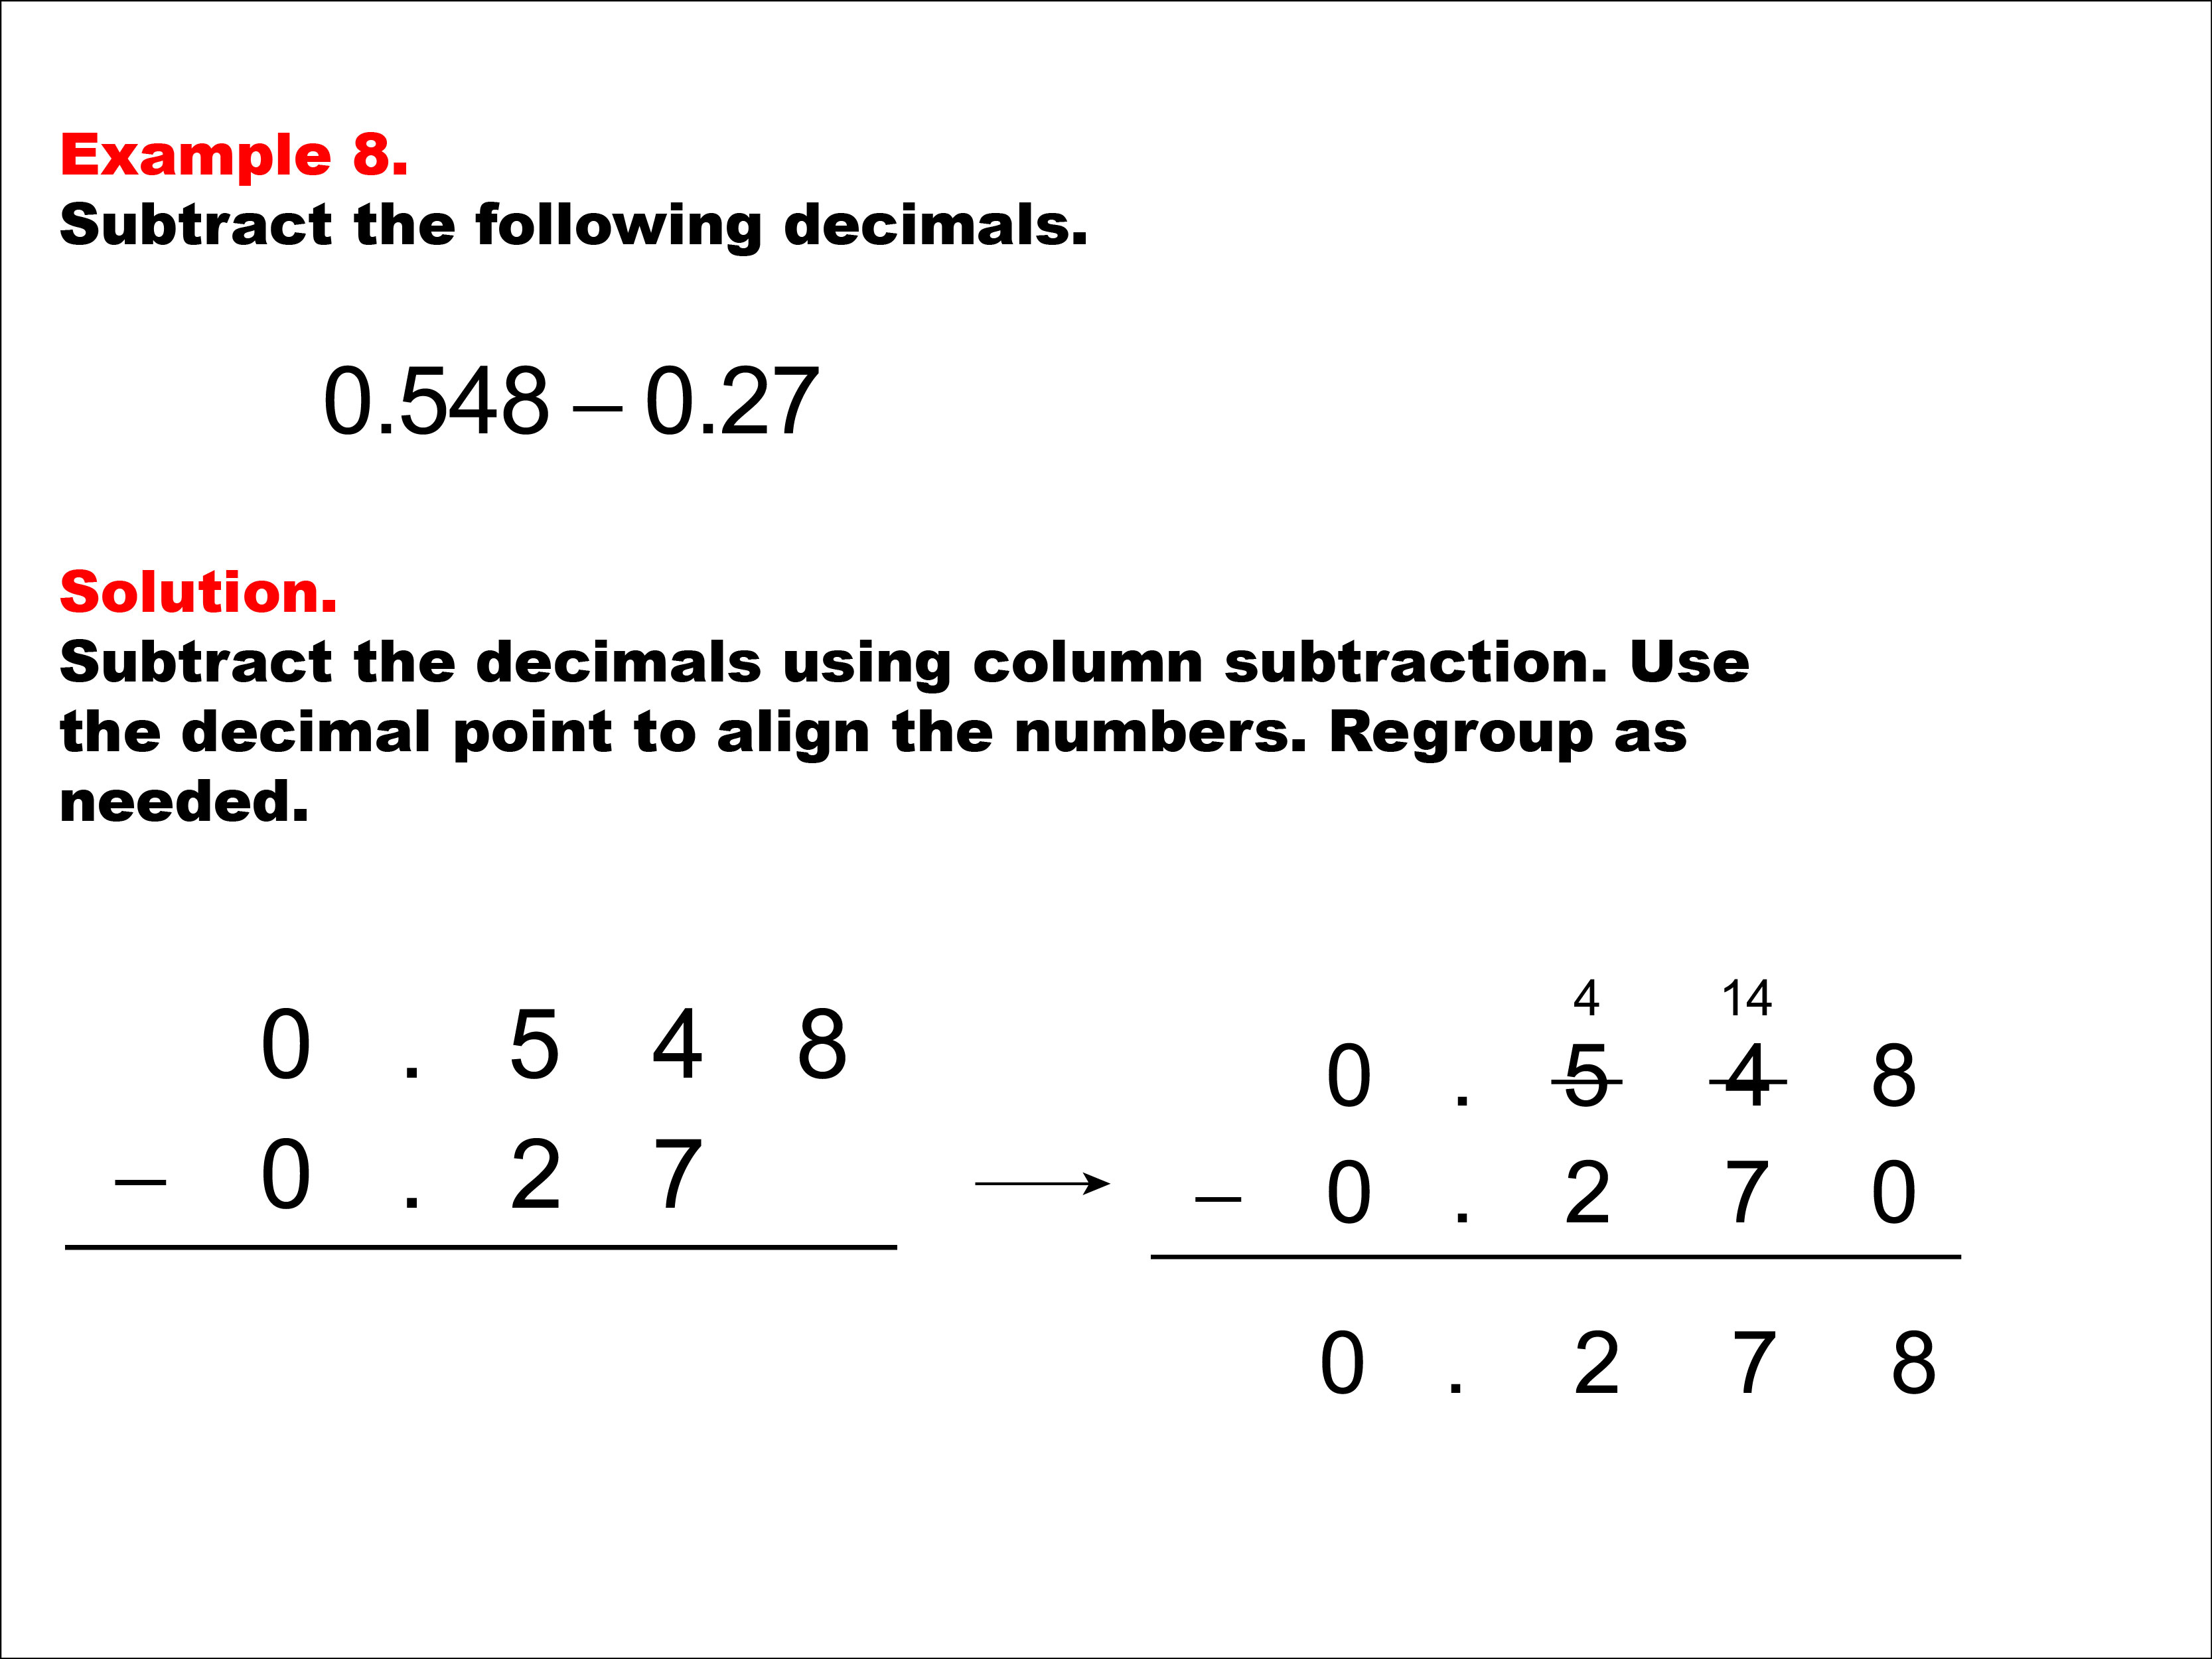 subtracting-decimals-media4math